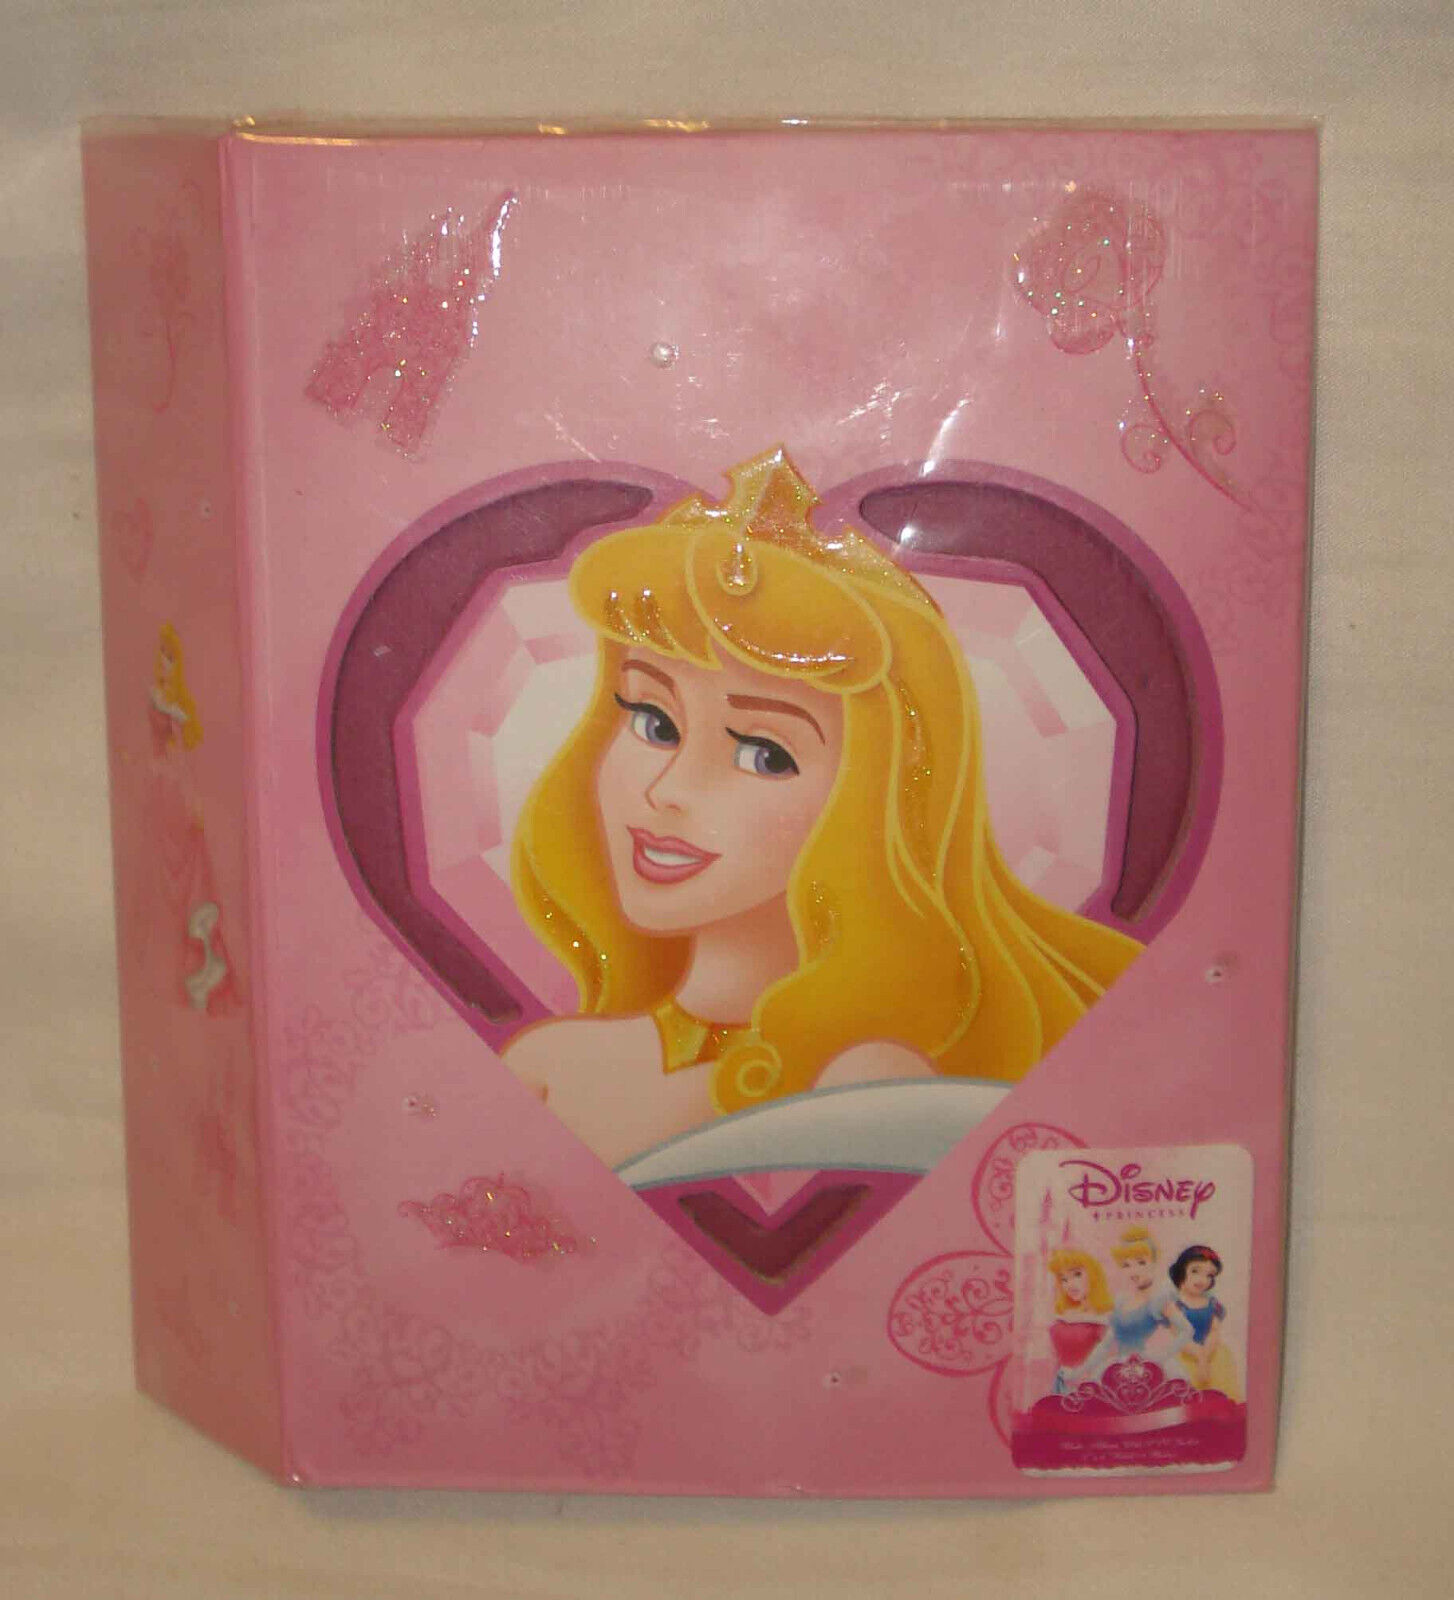 Disney Princess Sleeping Beauty Aurora 4x6 Photo Album Pvc Jacket Holds 64 Photo